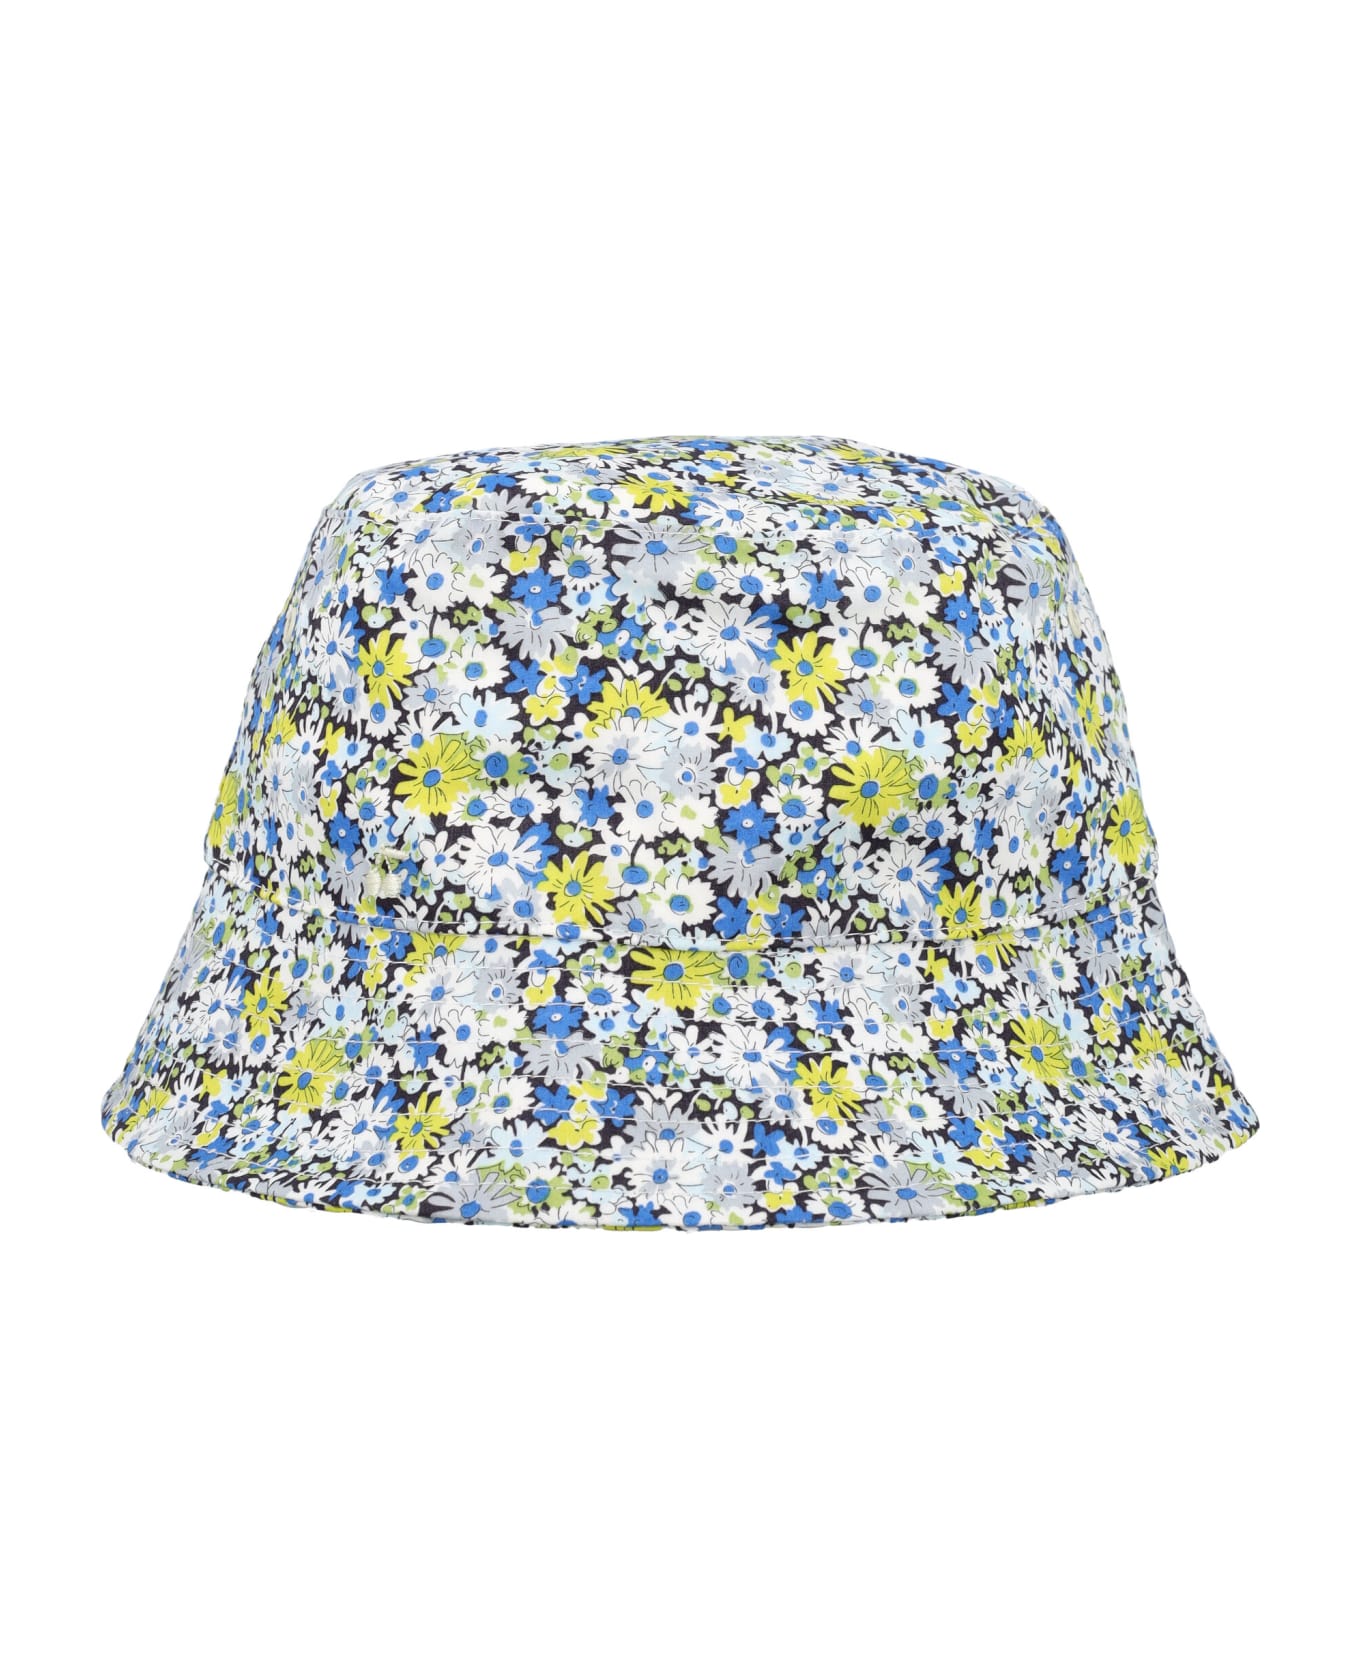 Bonpoint Theana Bucket Hat - FLOWERS BLEU アクセサリー＆ギフト